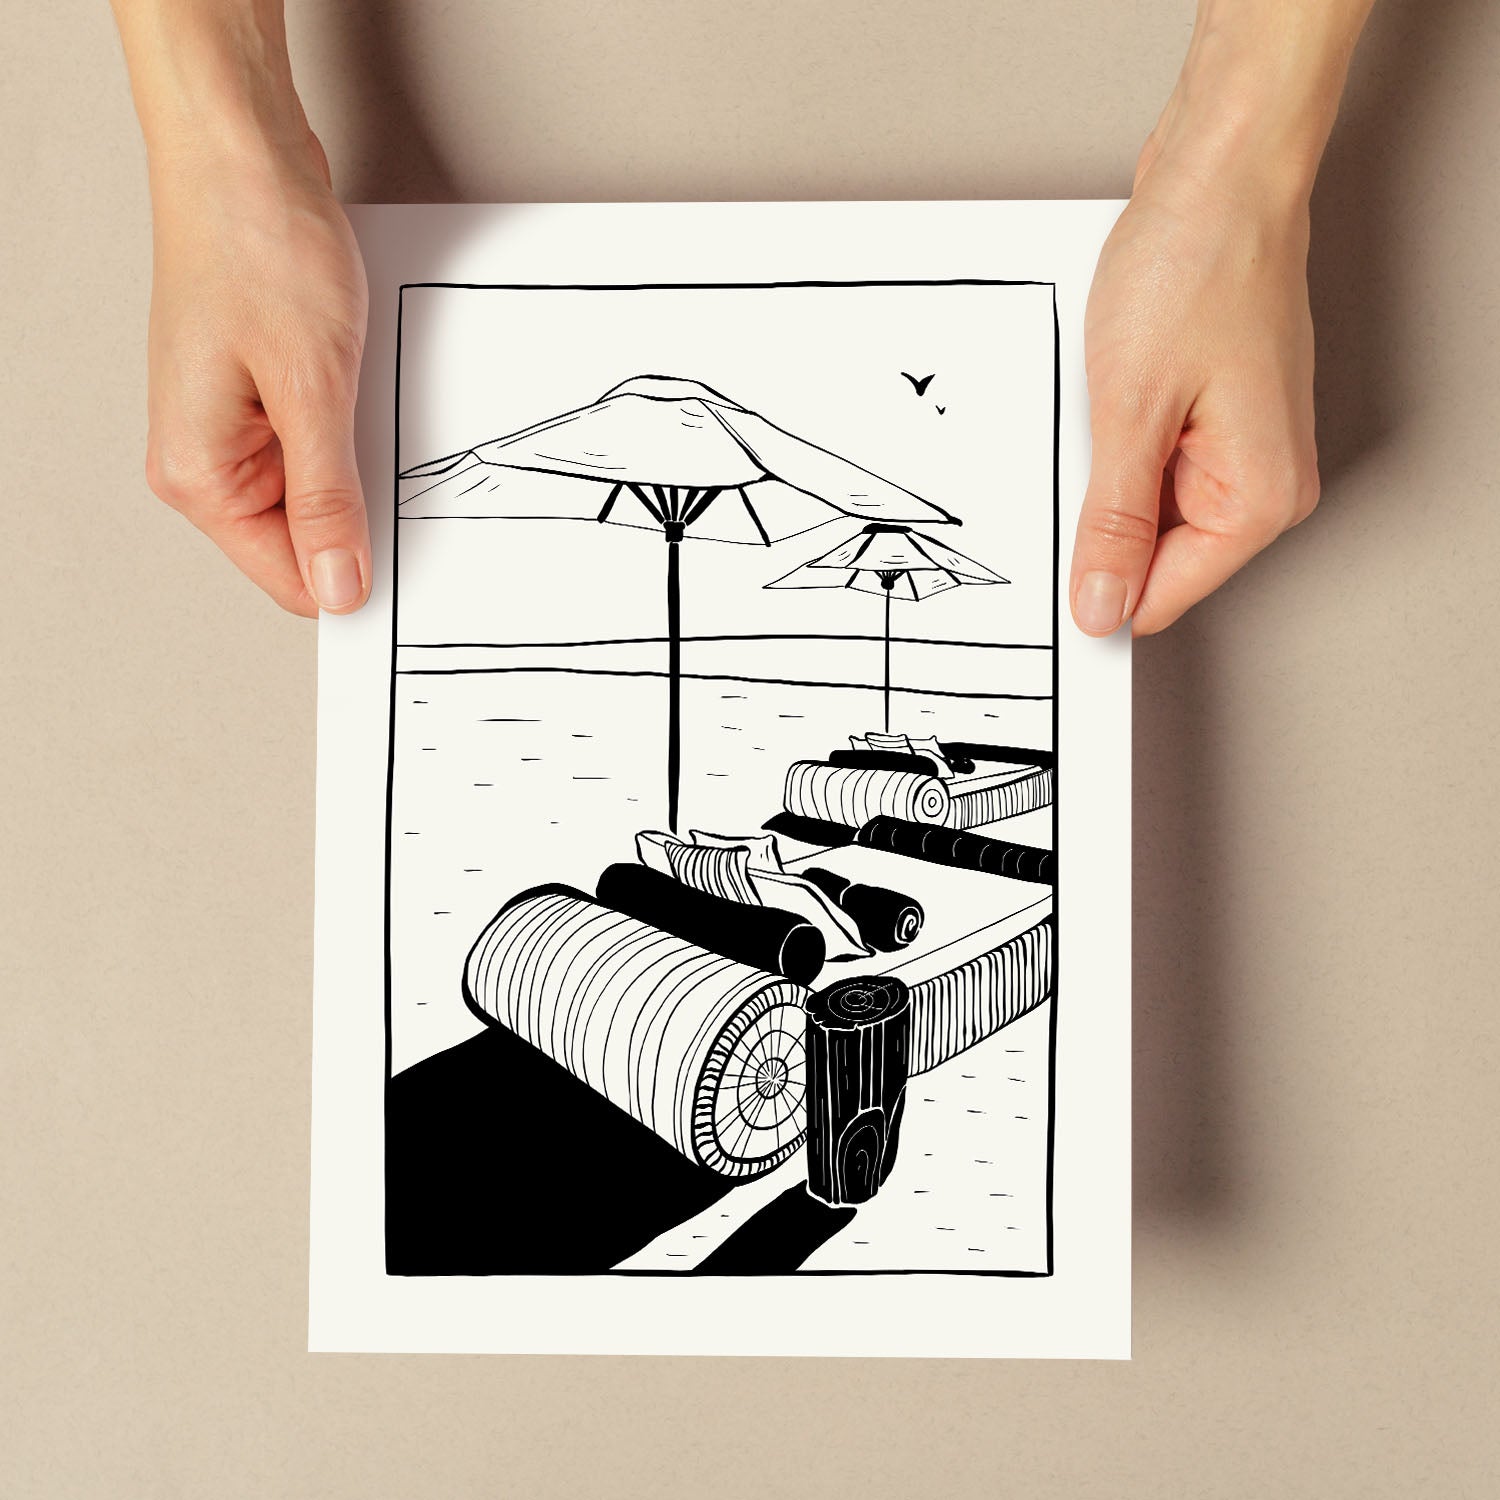 Beachside Umbrella-Artwork-Nacnic-Nacnic Estudio SL